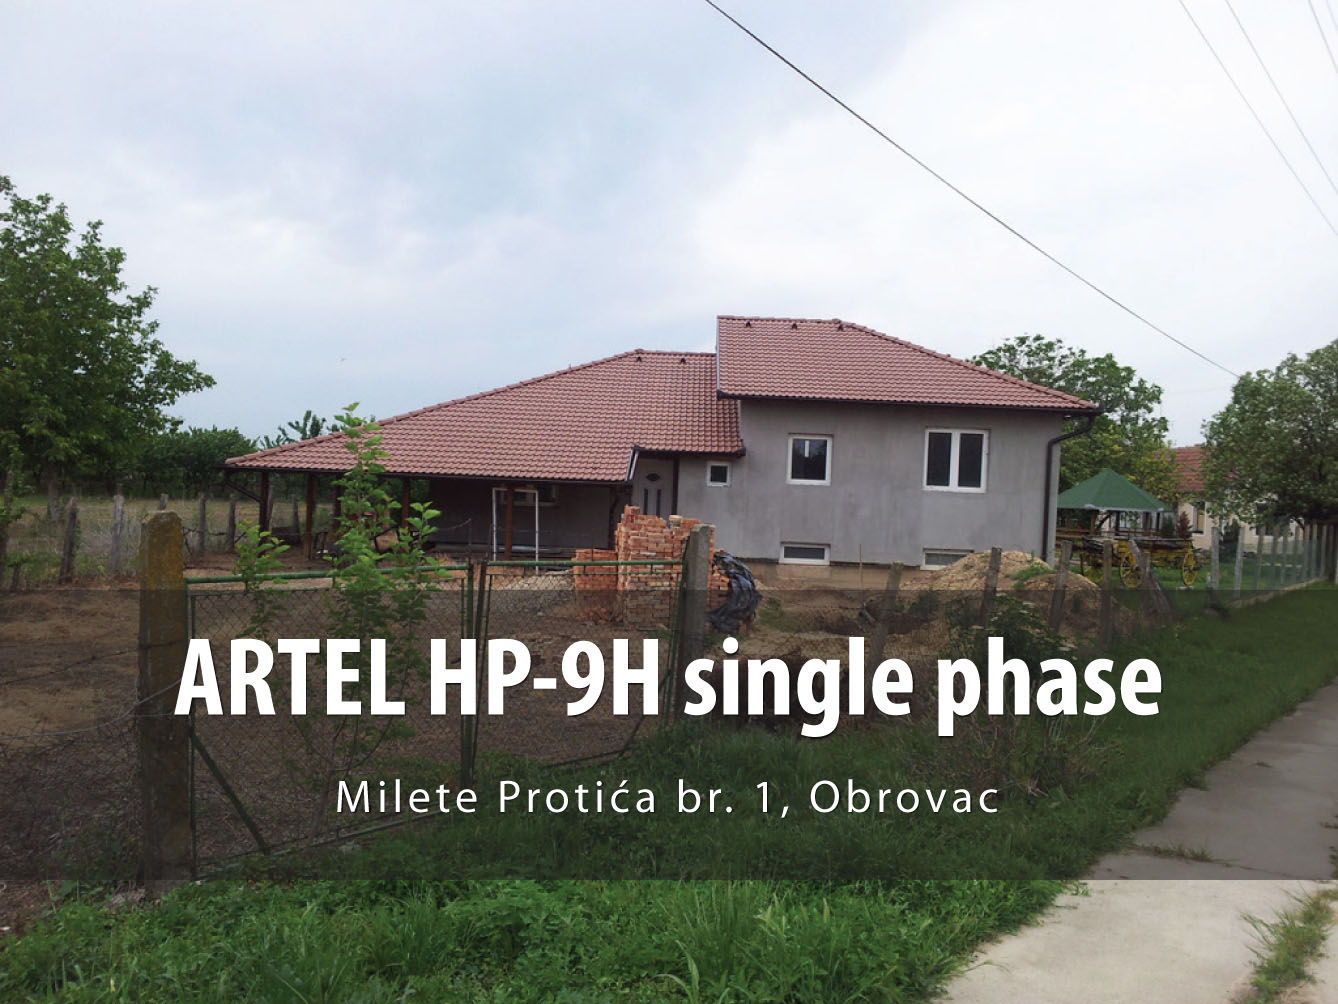 ARTEL HP-9H single phase Milete Protića Obrovac